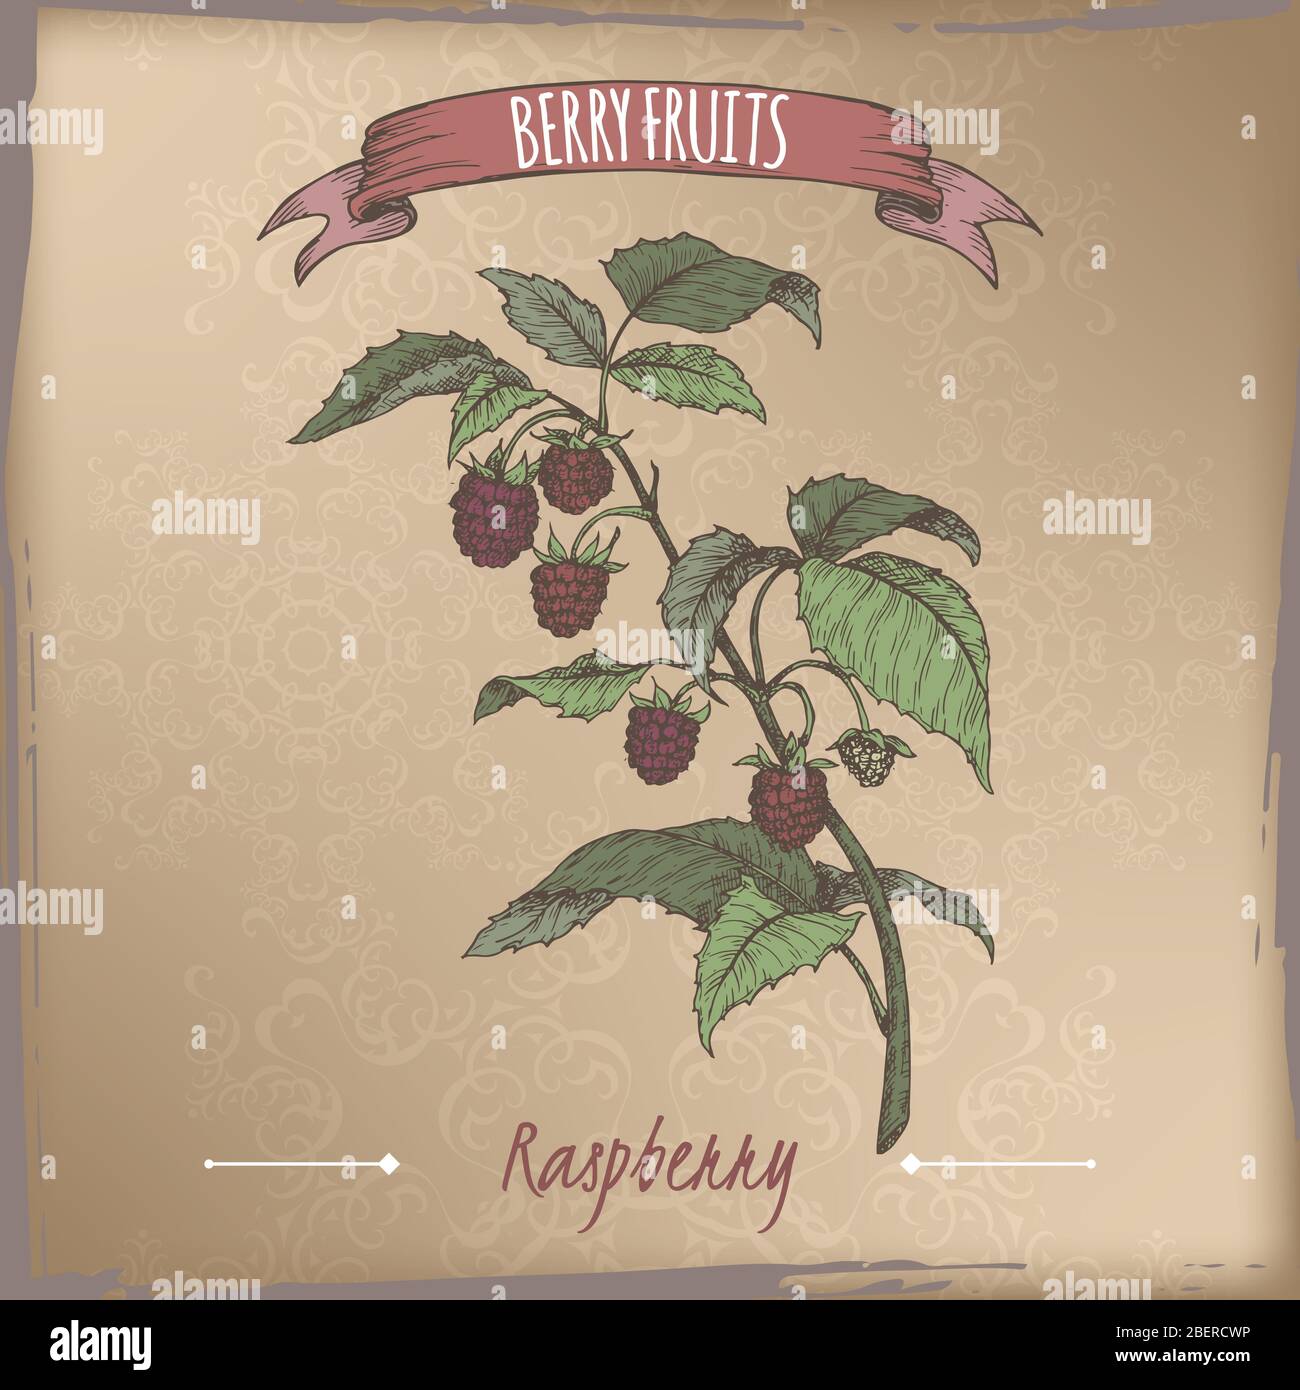 Rote Himbeere aka Rubus idaeus Zweig Farbe Skizze auf Vintage-Hintergrund. Berry Fruits Serie. Stock Vektor